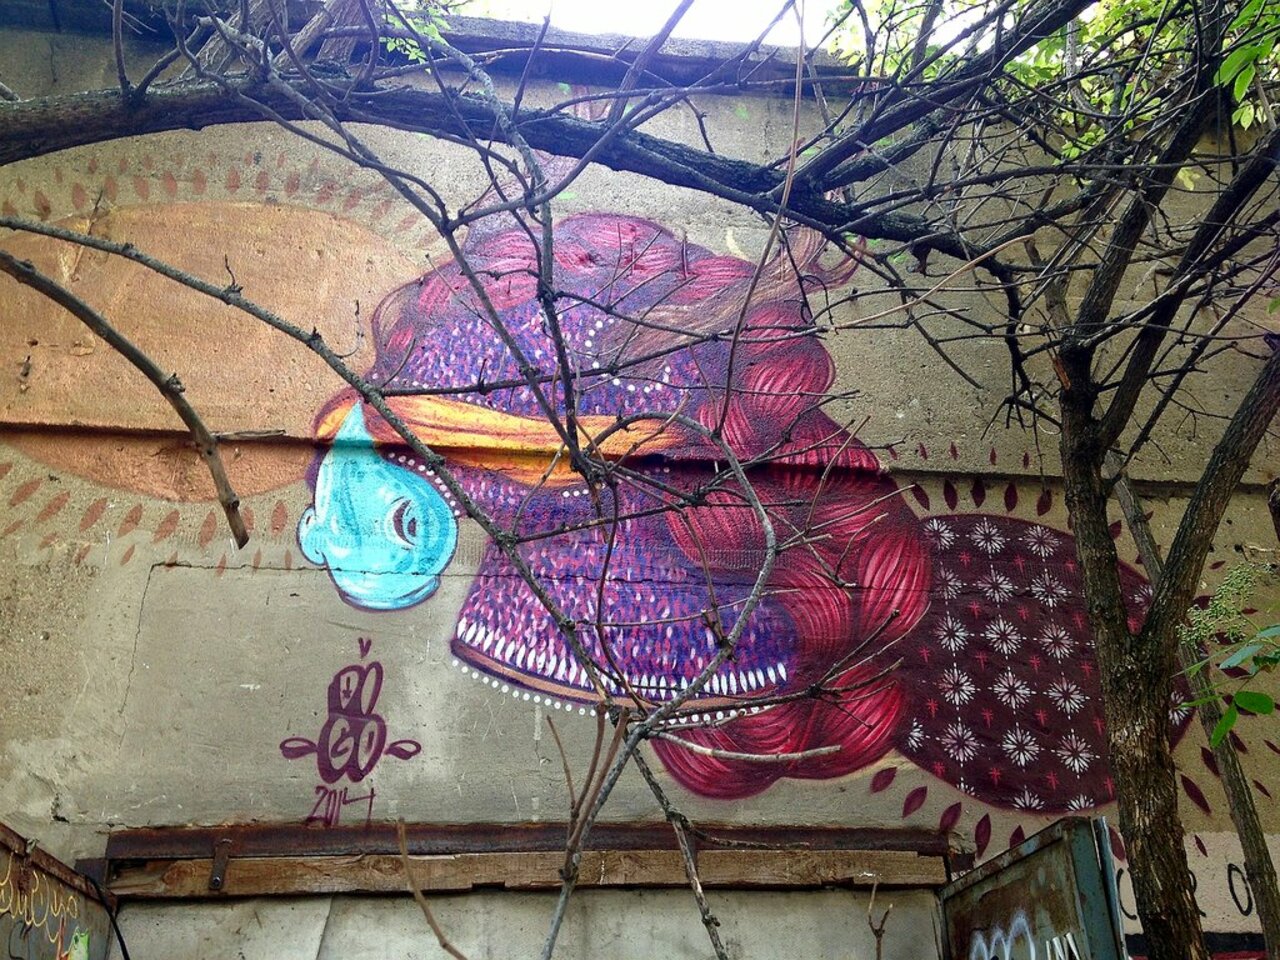 Street Art by Digo Cardoso in #Berlin http://www.urbacolors.com #art #mural #graffiti #streetart https://t.co/YaJsQ0Aguo